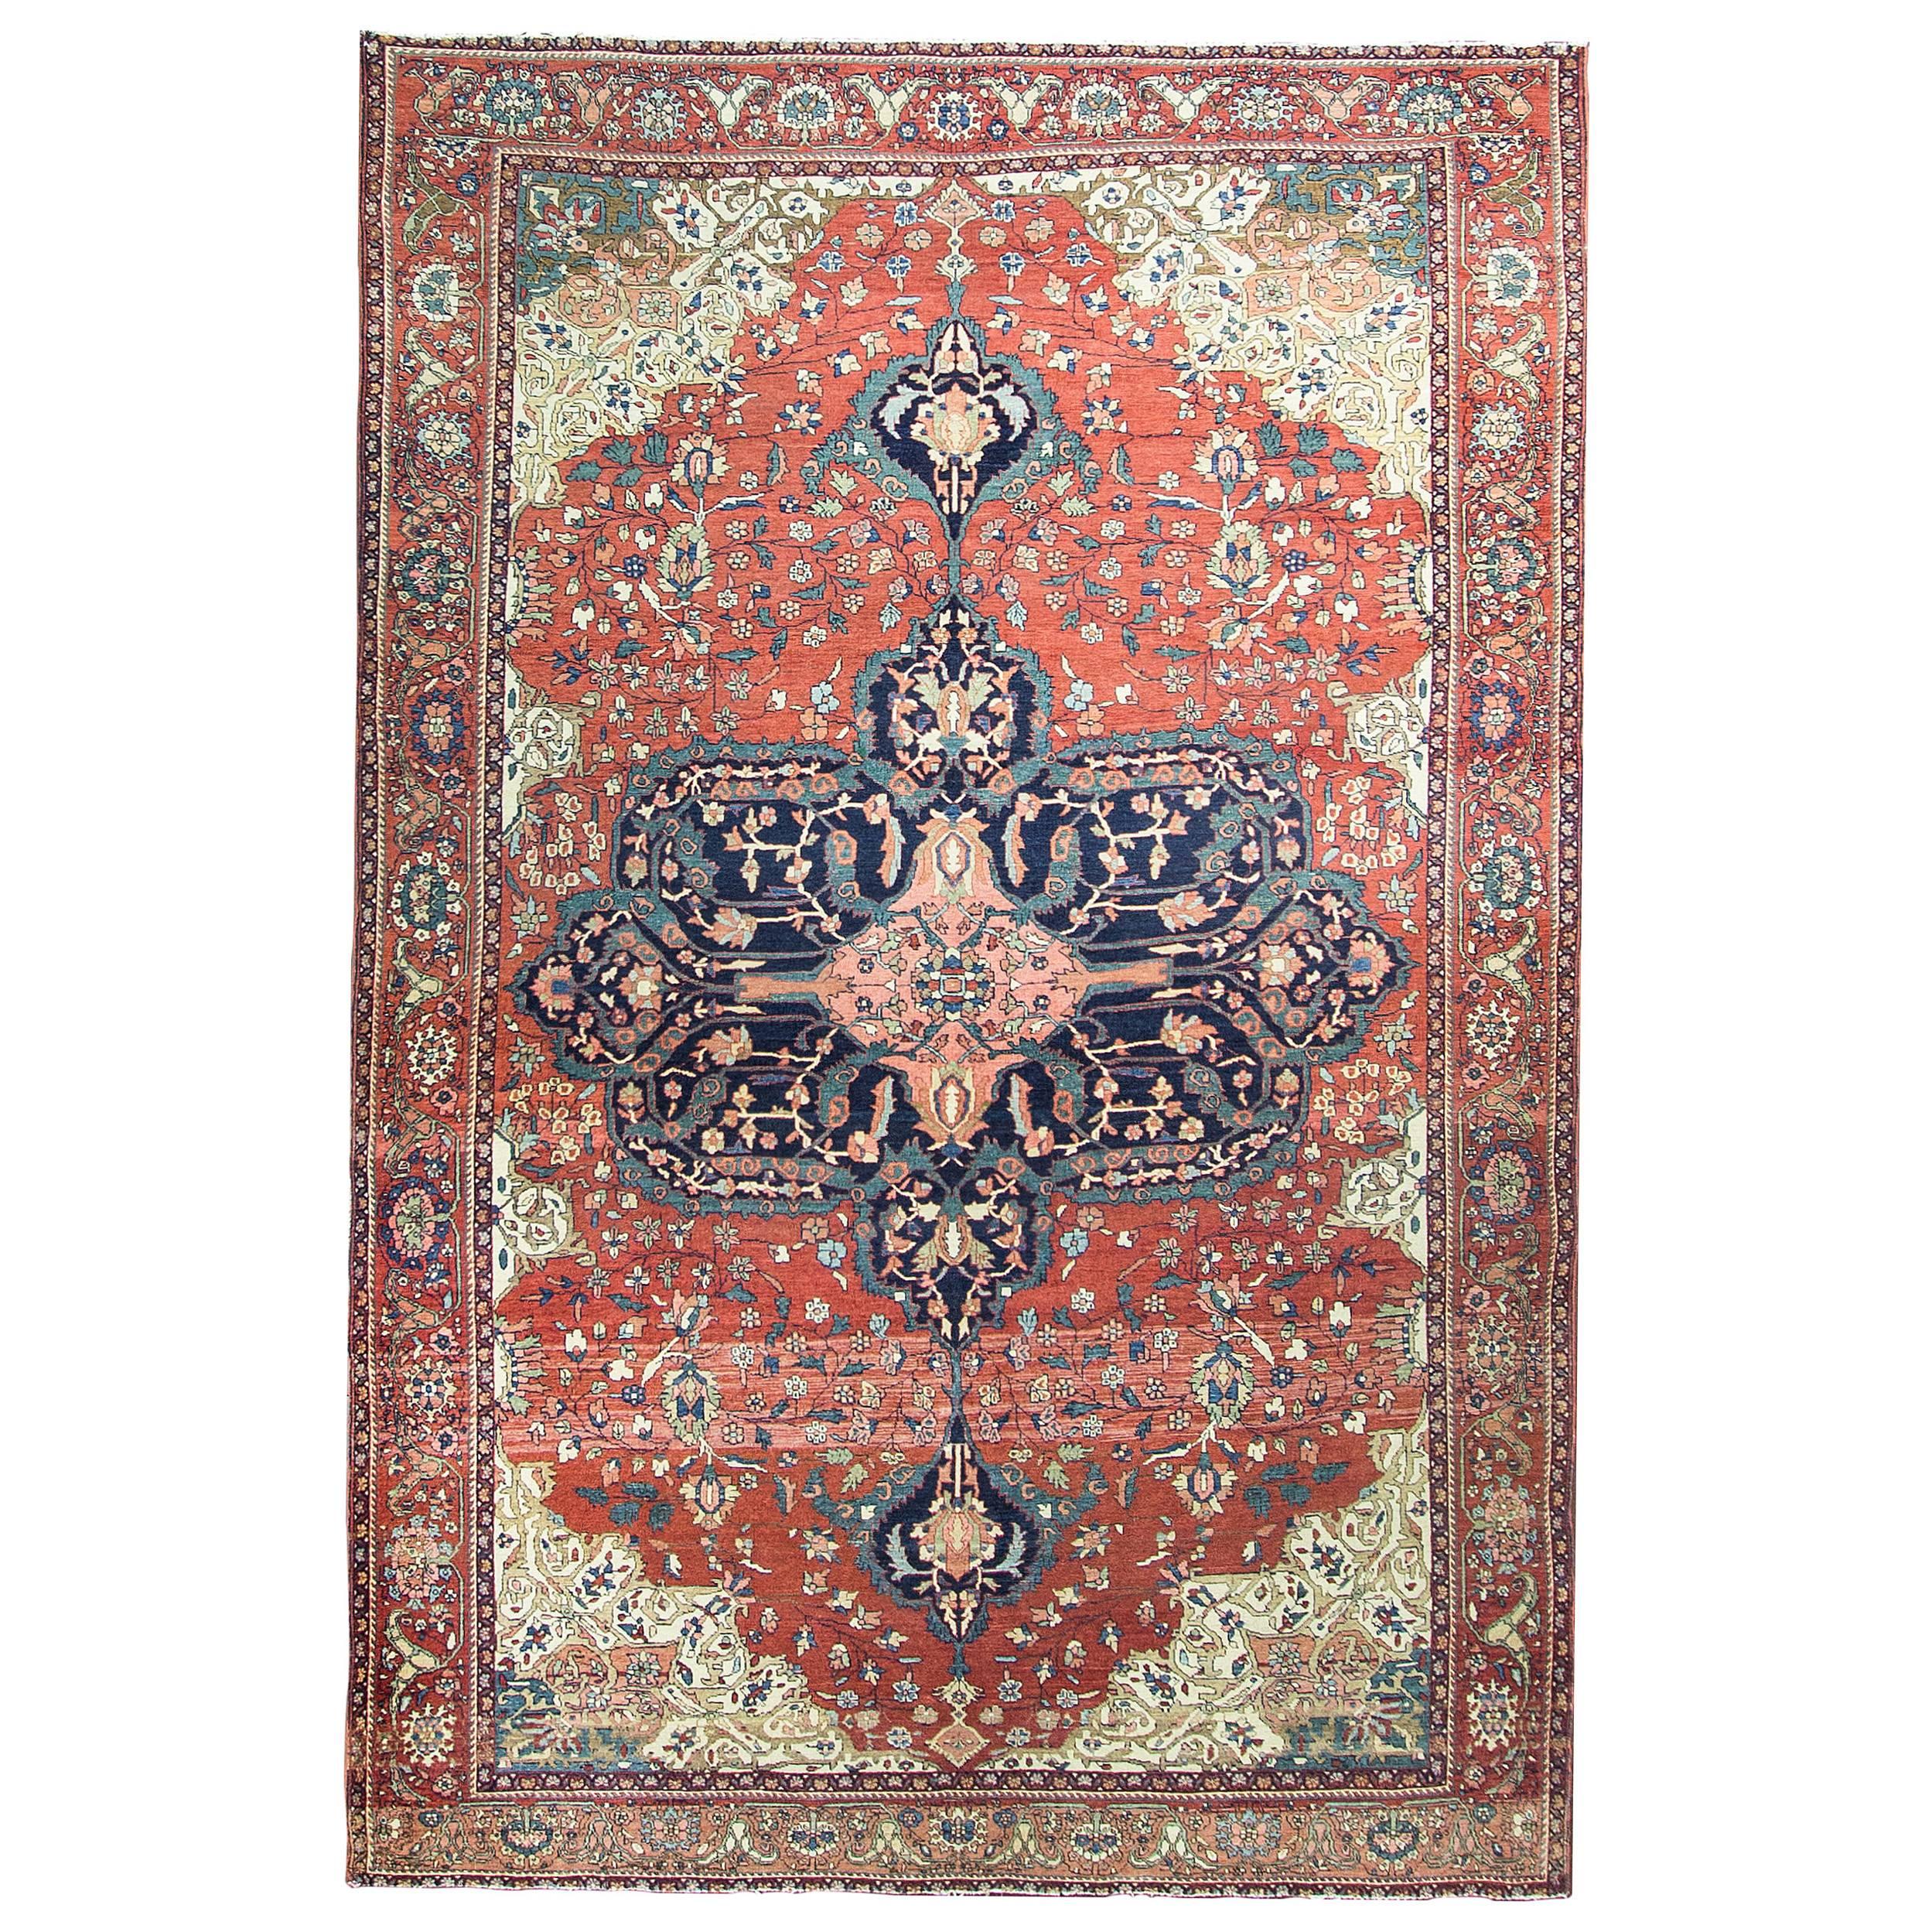  Antique Persian Feraghan Sarouk Carpet, 7' x 10'6"